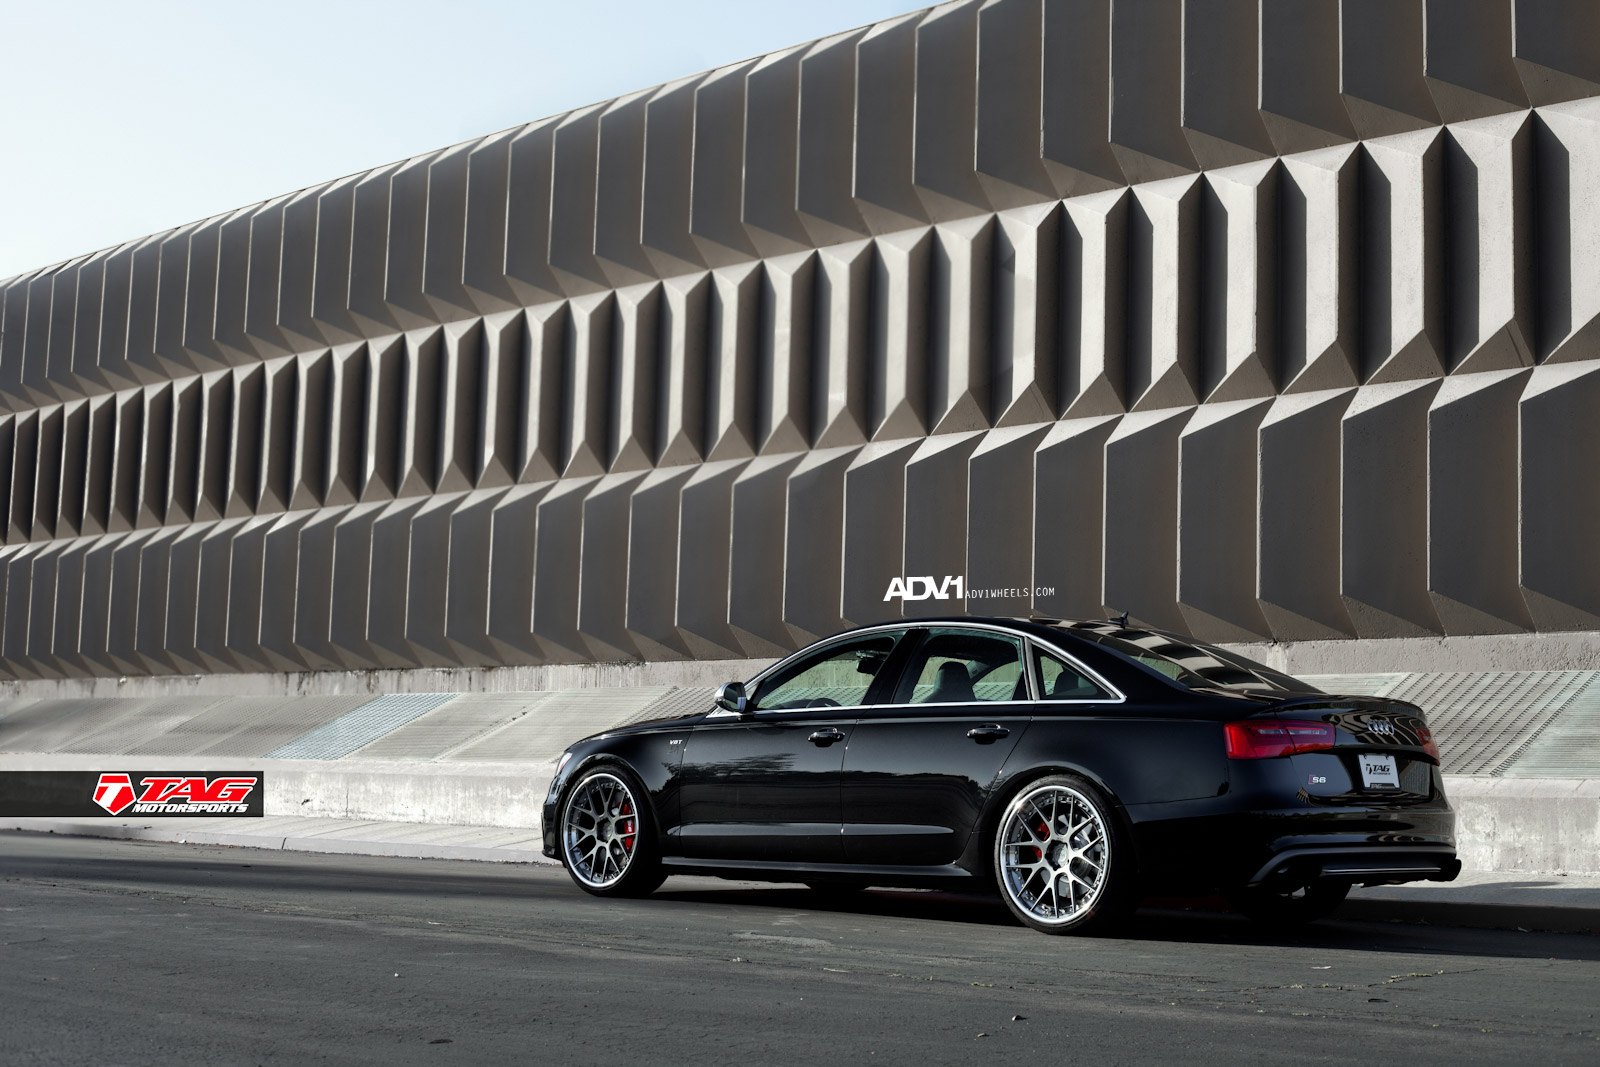 ADV1 Wheels on Gloss Black Audi S6 - Photo by ADV.1